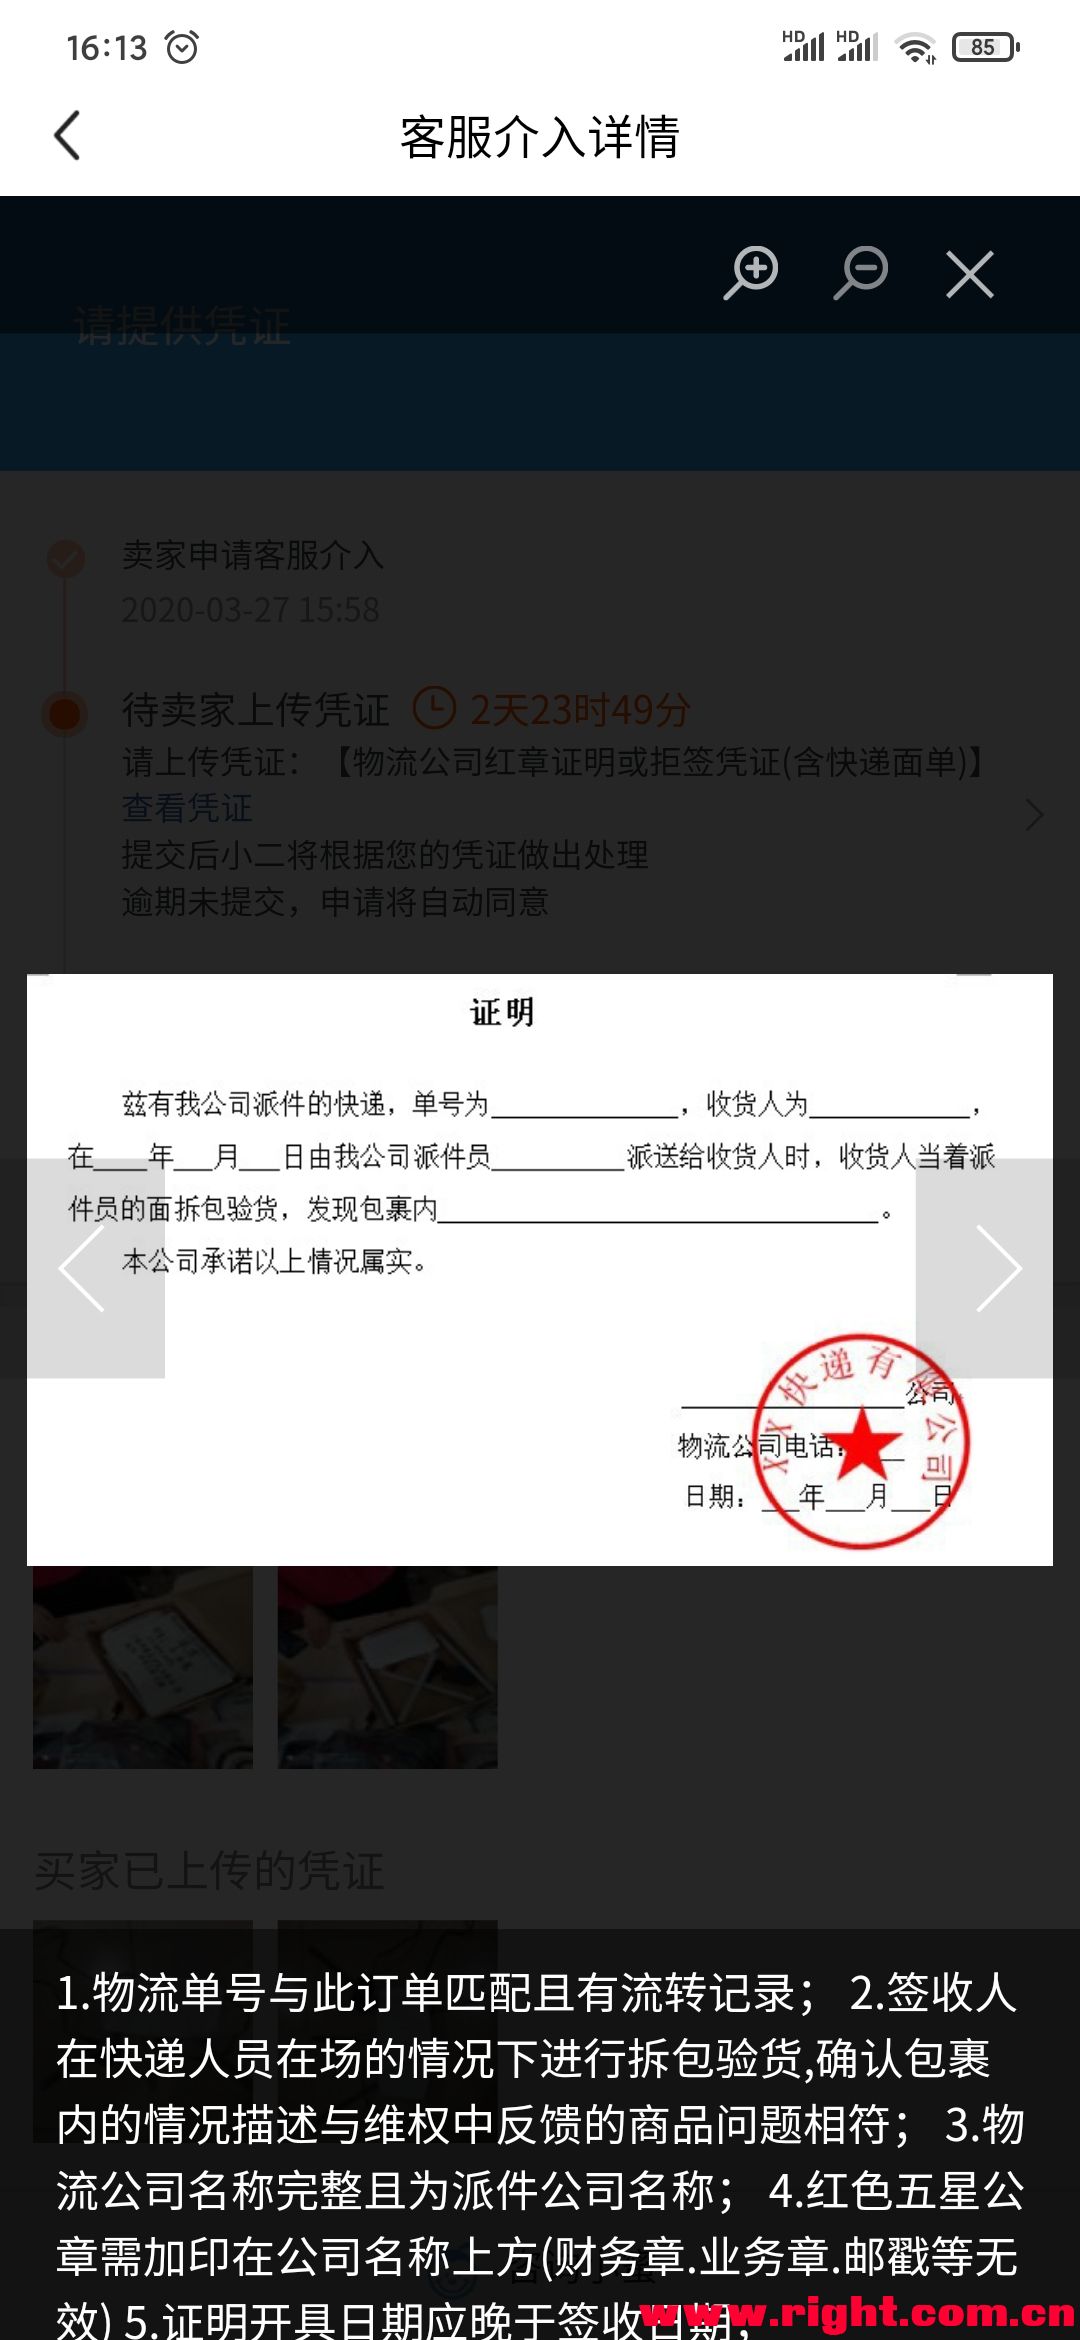 Screenshot_2020-03-27-16-13-21-772_com.taobao.idl.jpg